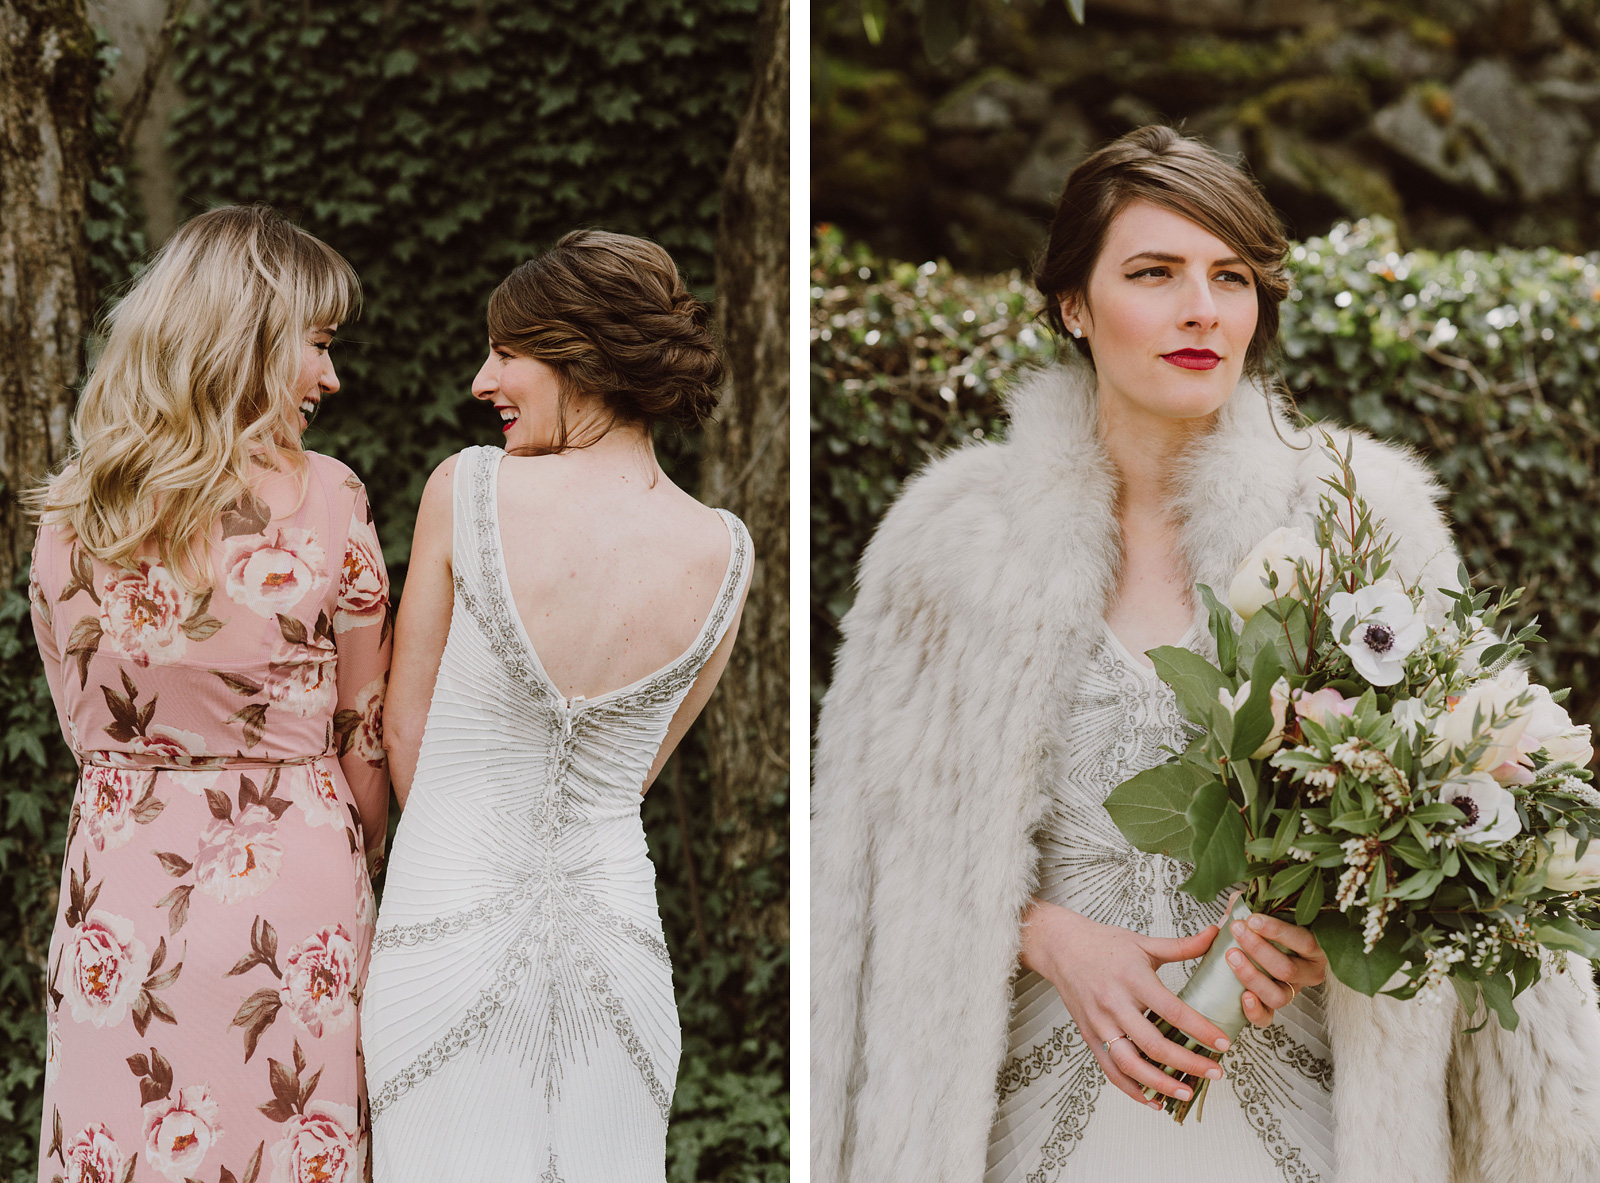 Portland Bridal Photography - Bride and bridesmaid giggling